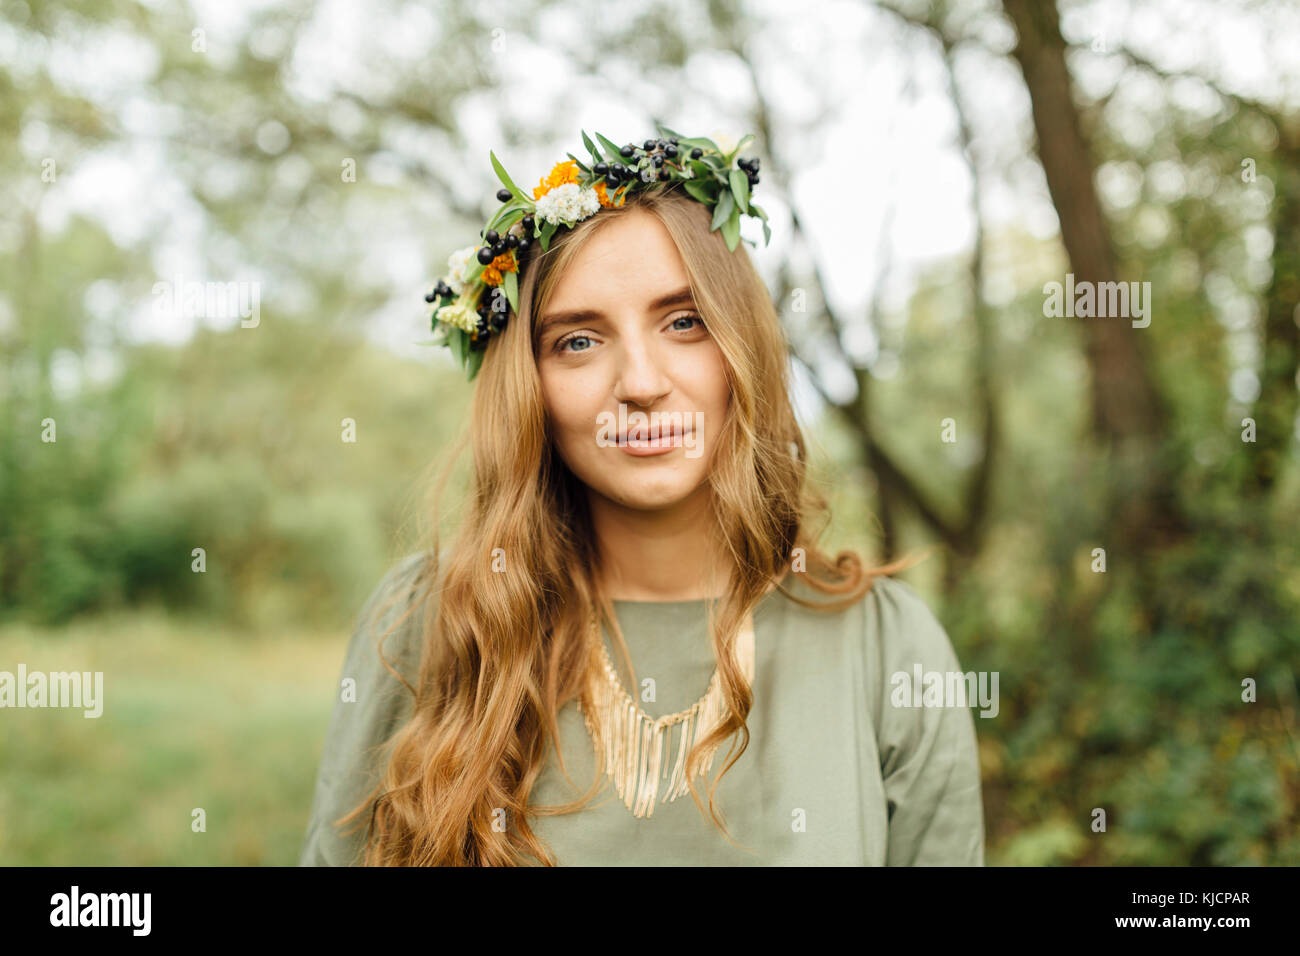 Middle Eastern woman wearing flower crown in woods Stock Photo